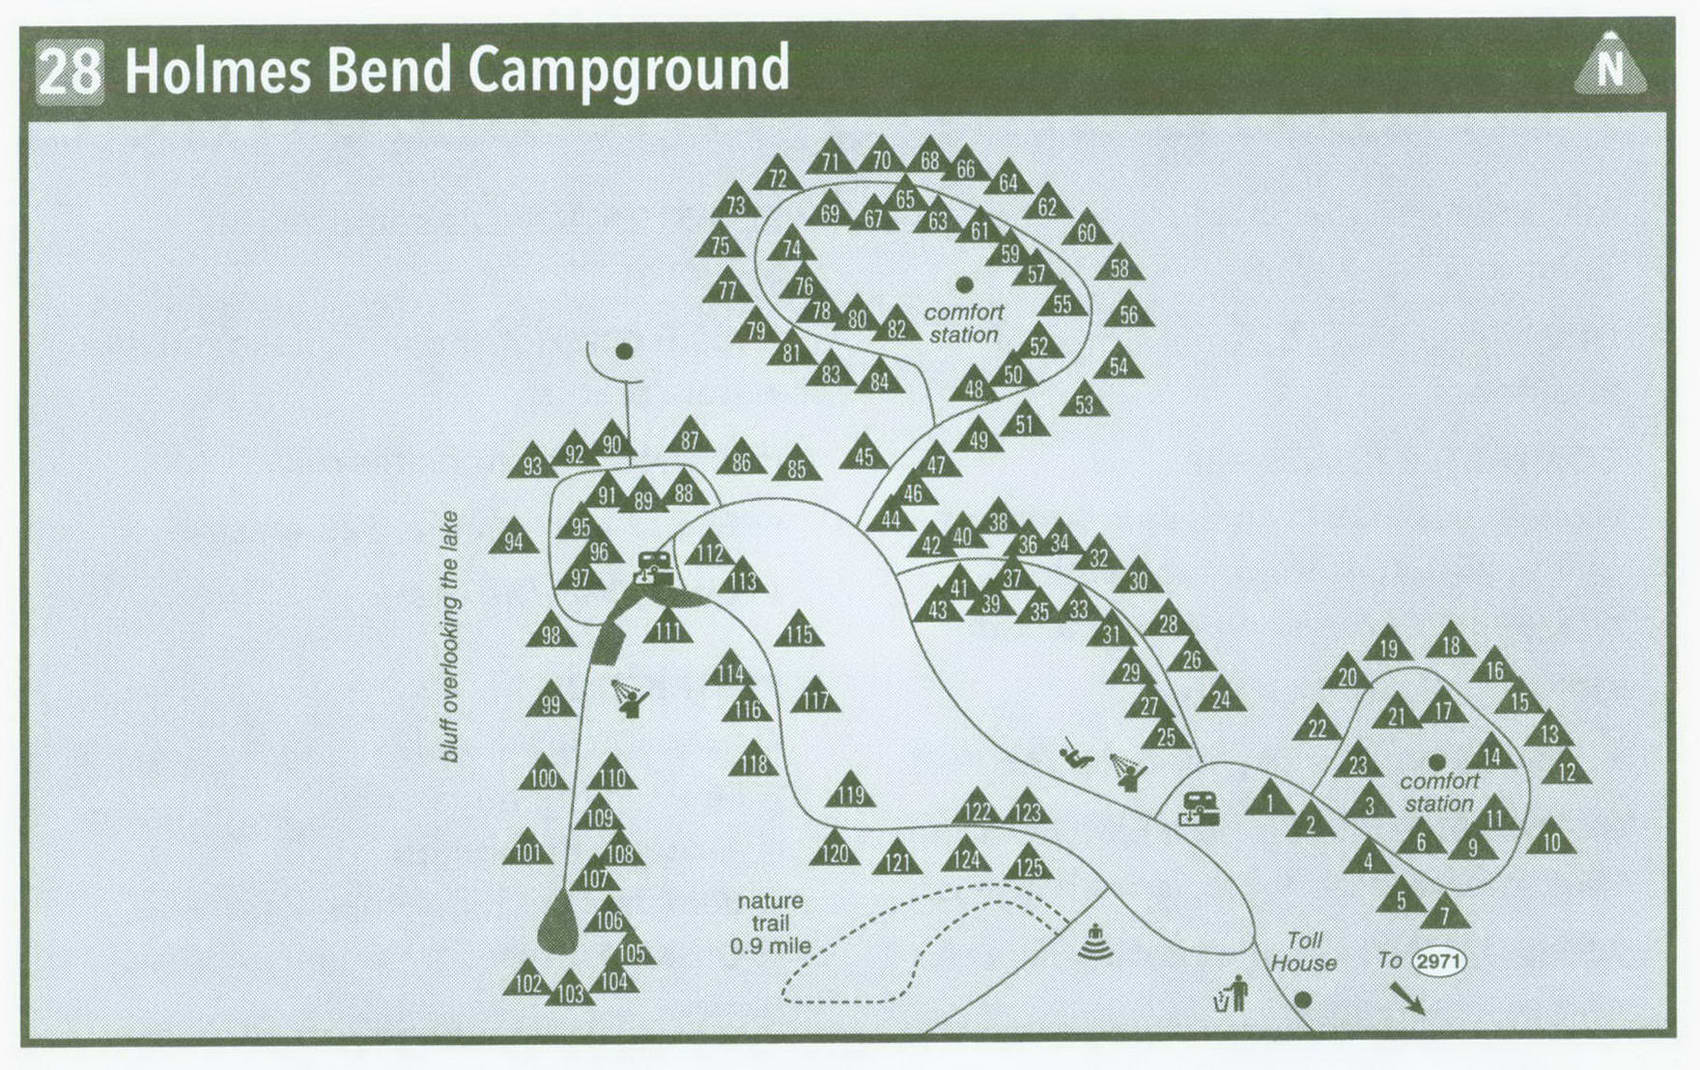 Plan of Holmes Bond Campground